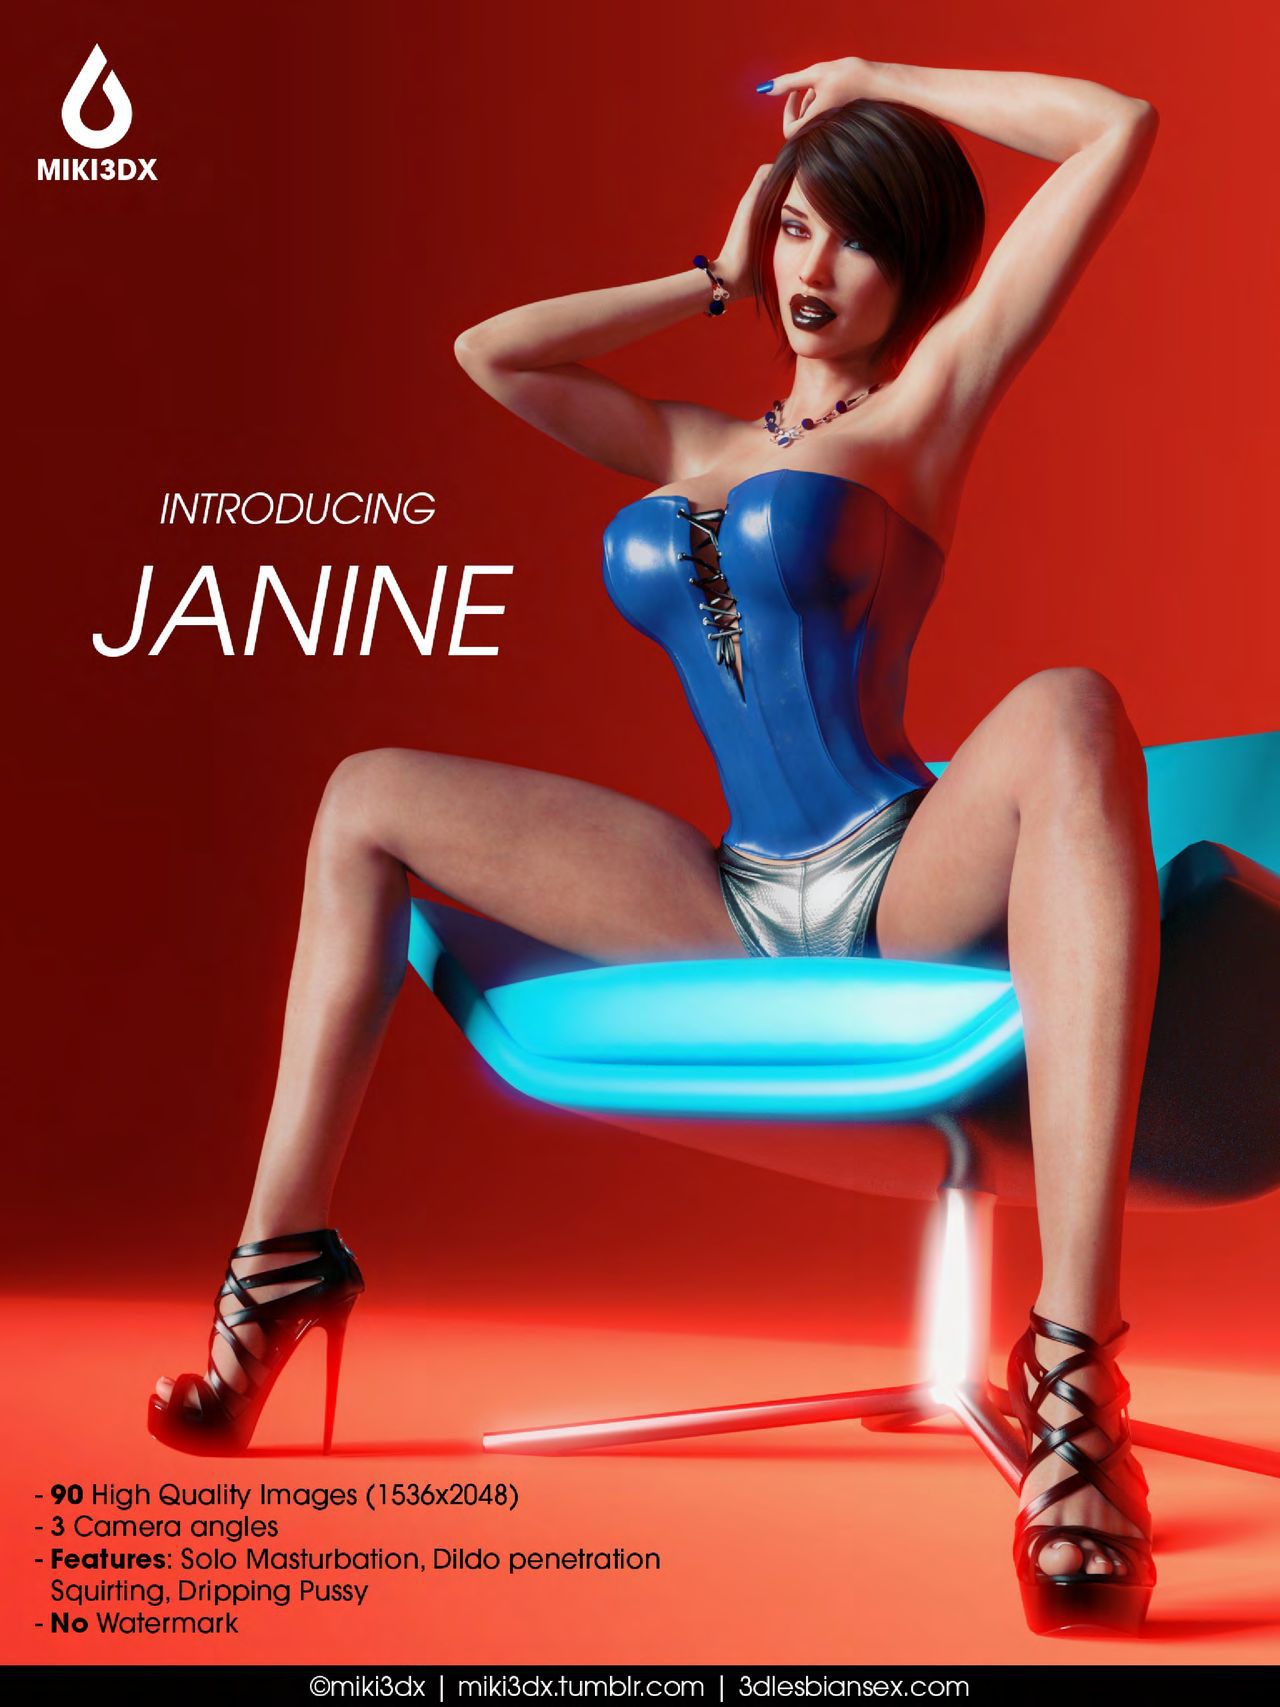 [Miki3DX] Introducing Janine (Pics + Gifs + Animation) 1